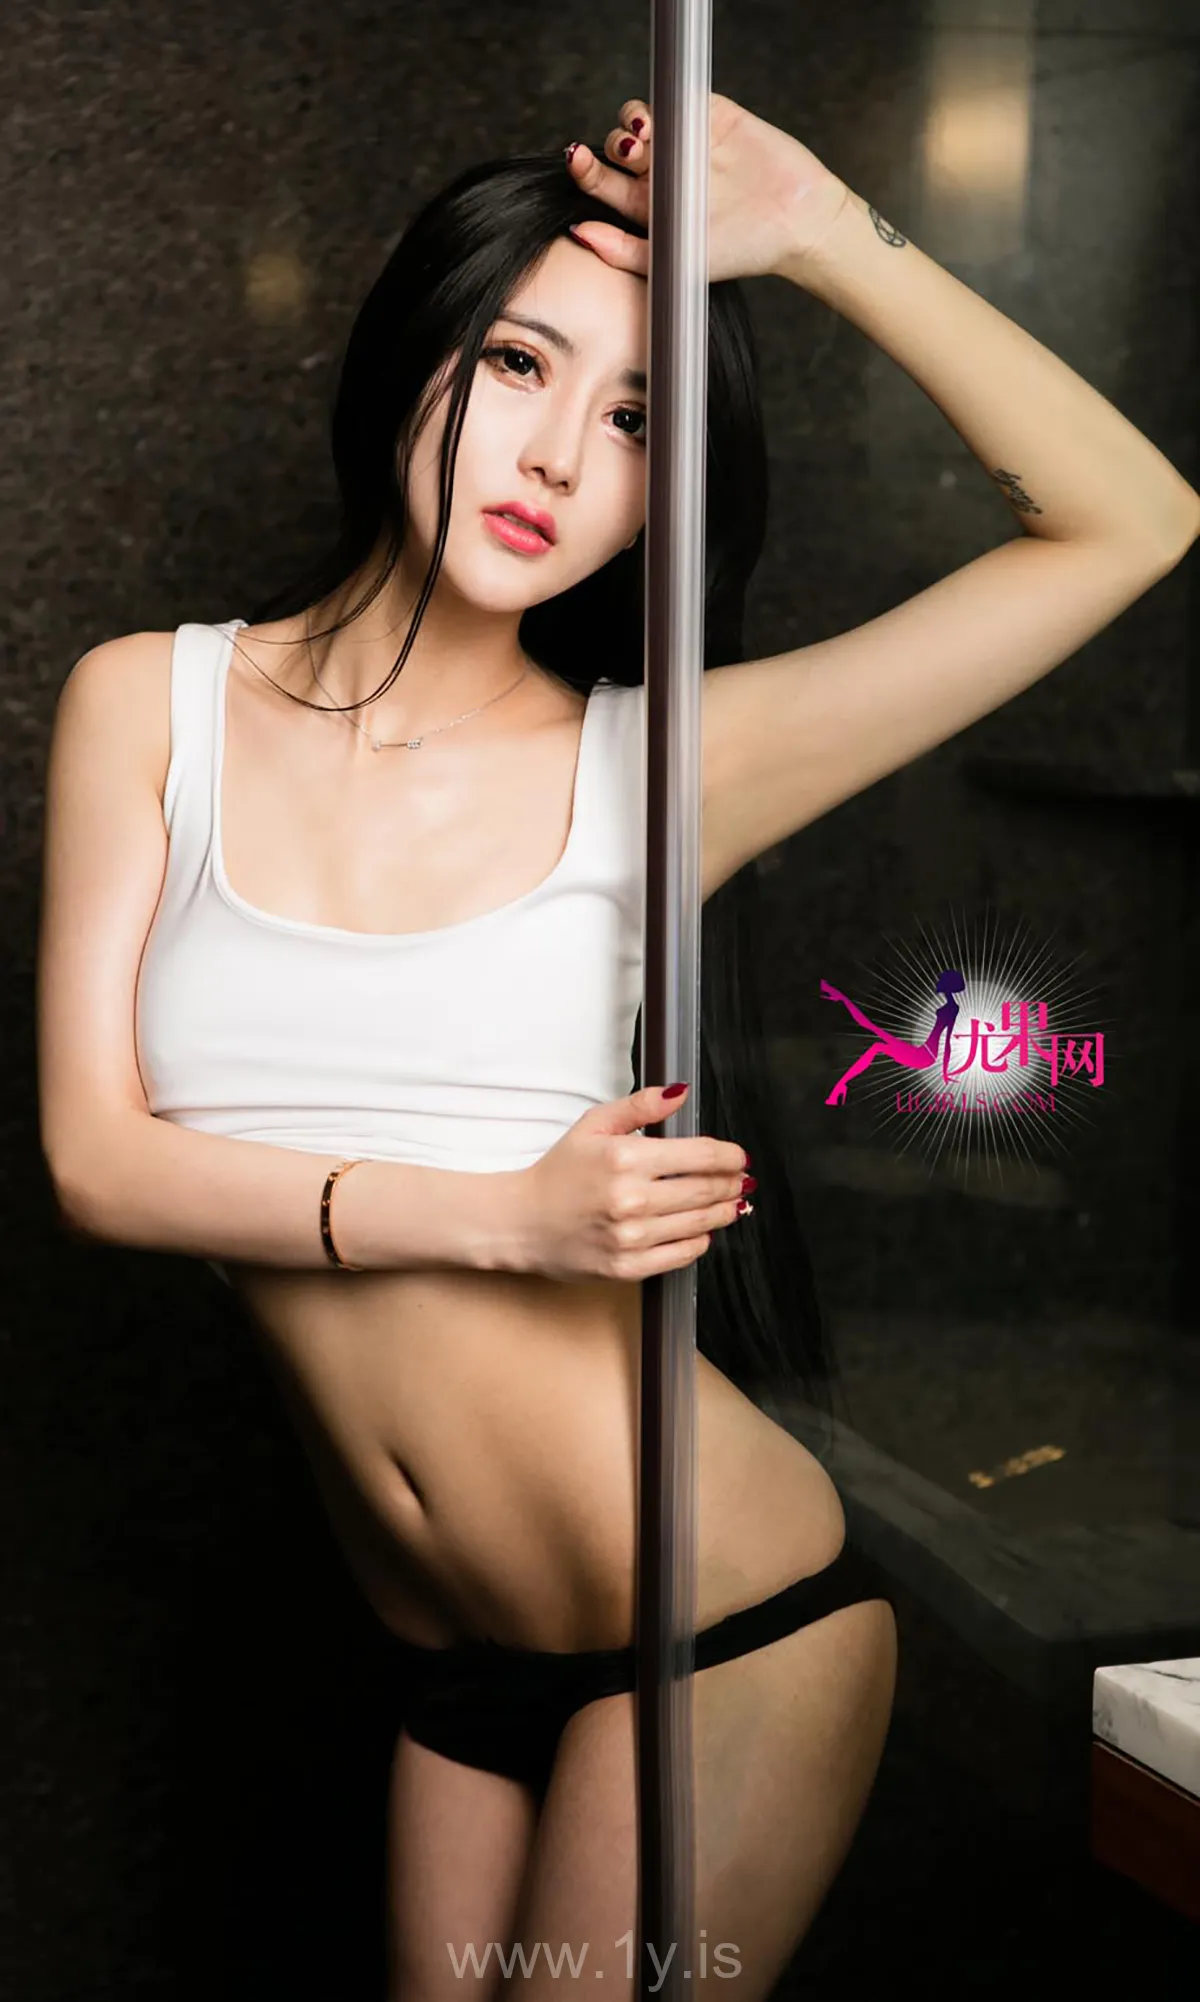 UGIRLS NO.258 Well Done & Sexy Chinese Mature Princess 金子熙甜言蜜语